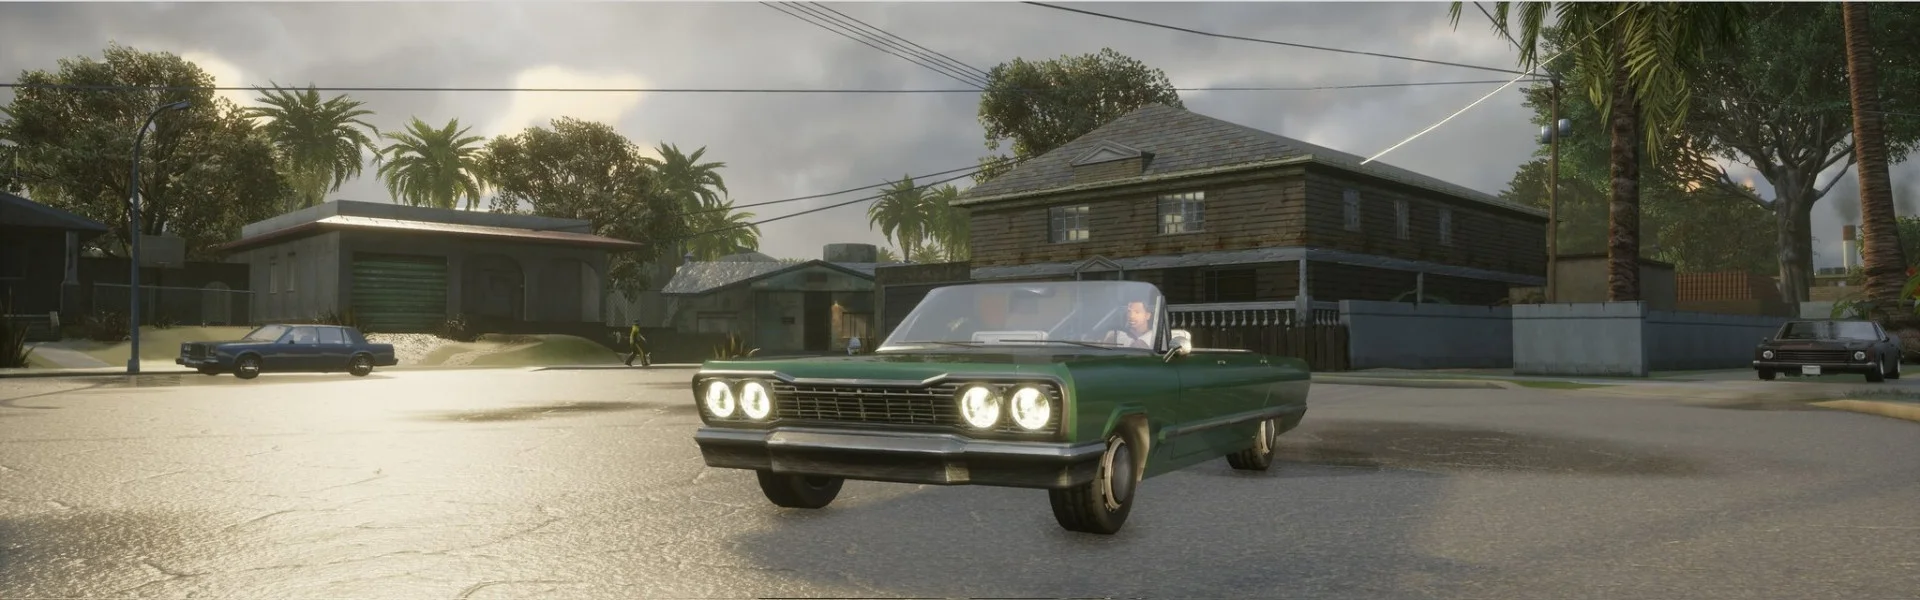 Rockstar представила трейлер и скриншоты GTA: The Trilogy – The Definitive Edition - фото 2